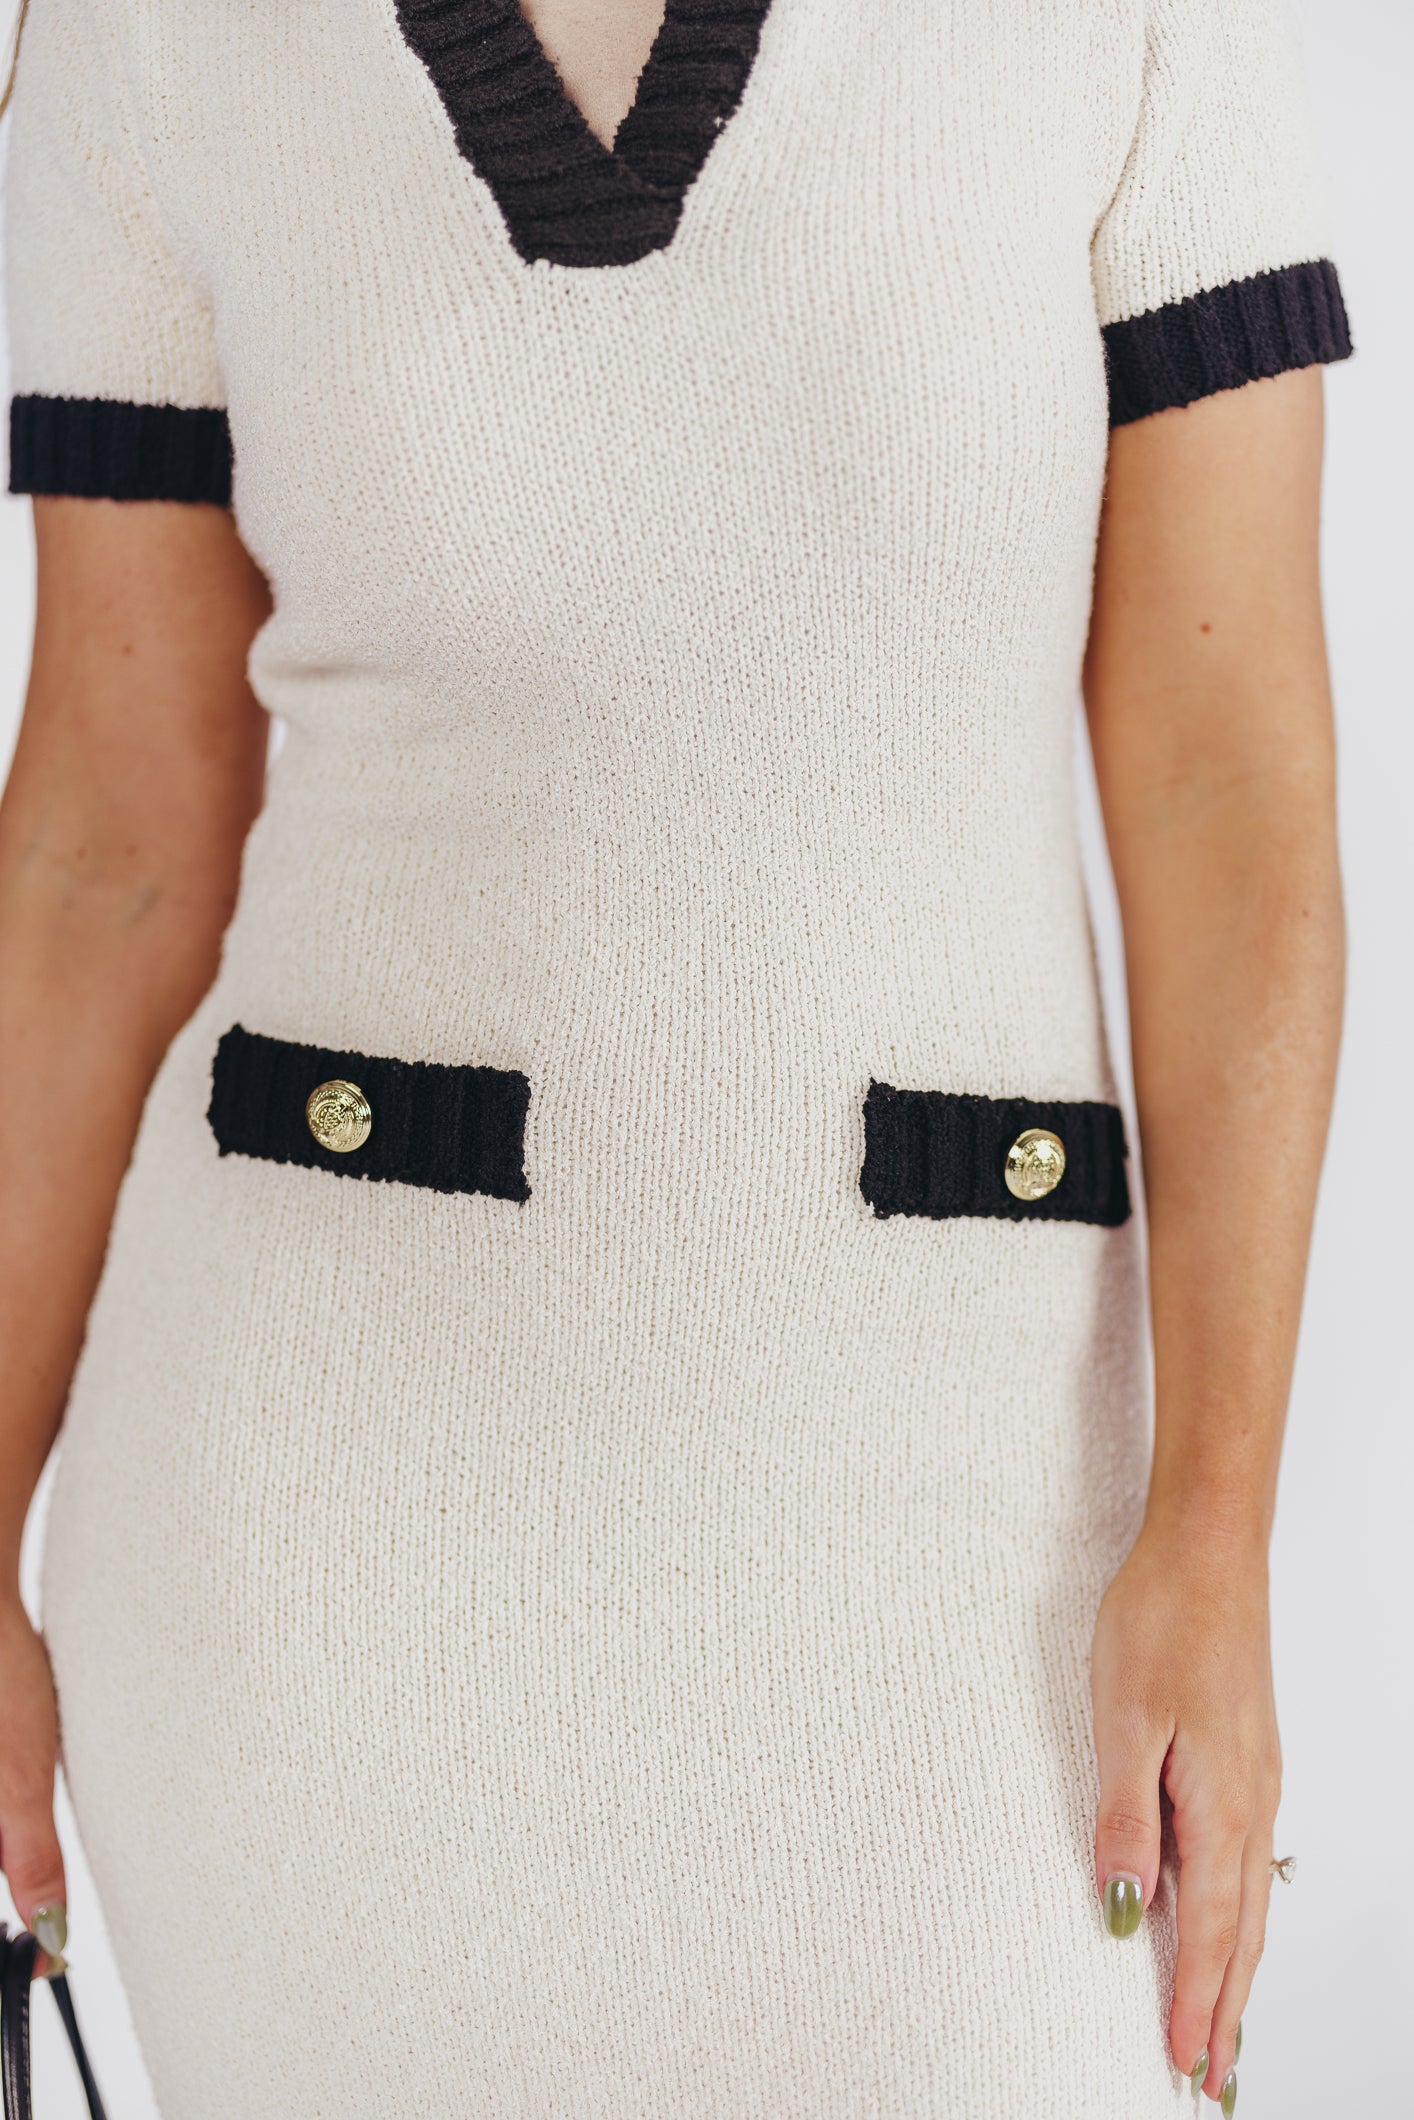 Kennedy Knit Collared Midi Dress in Cream/Black